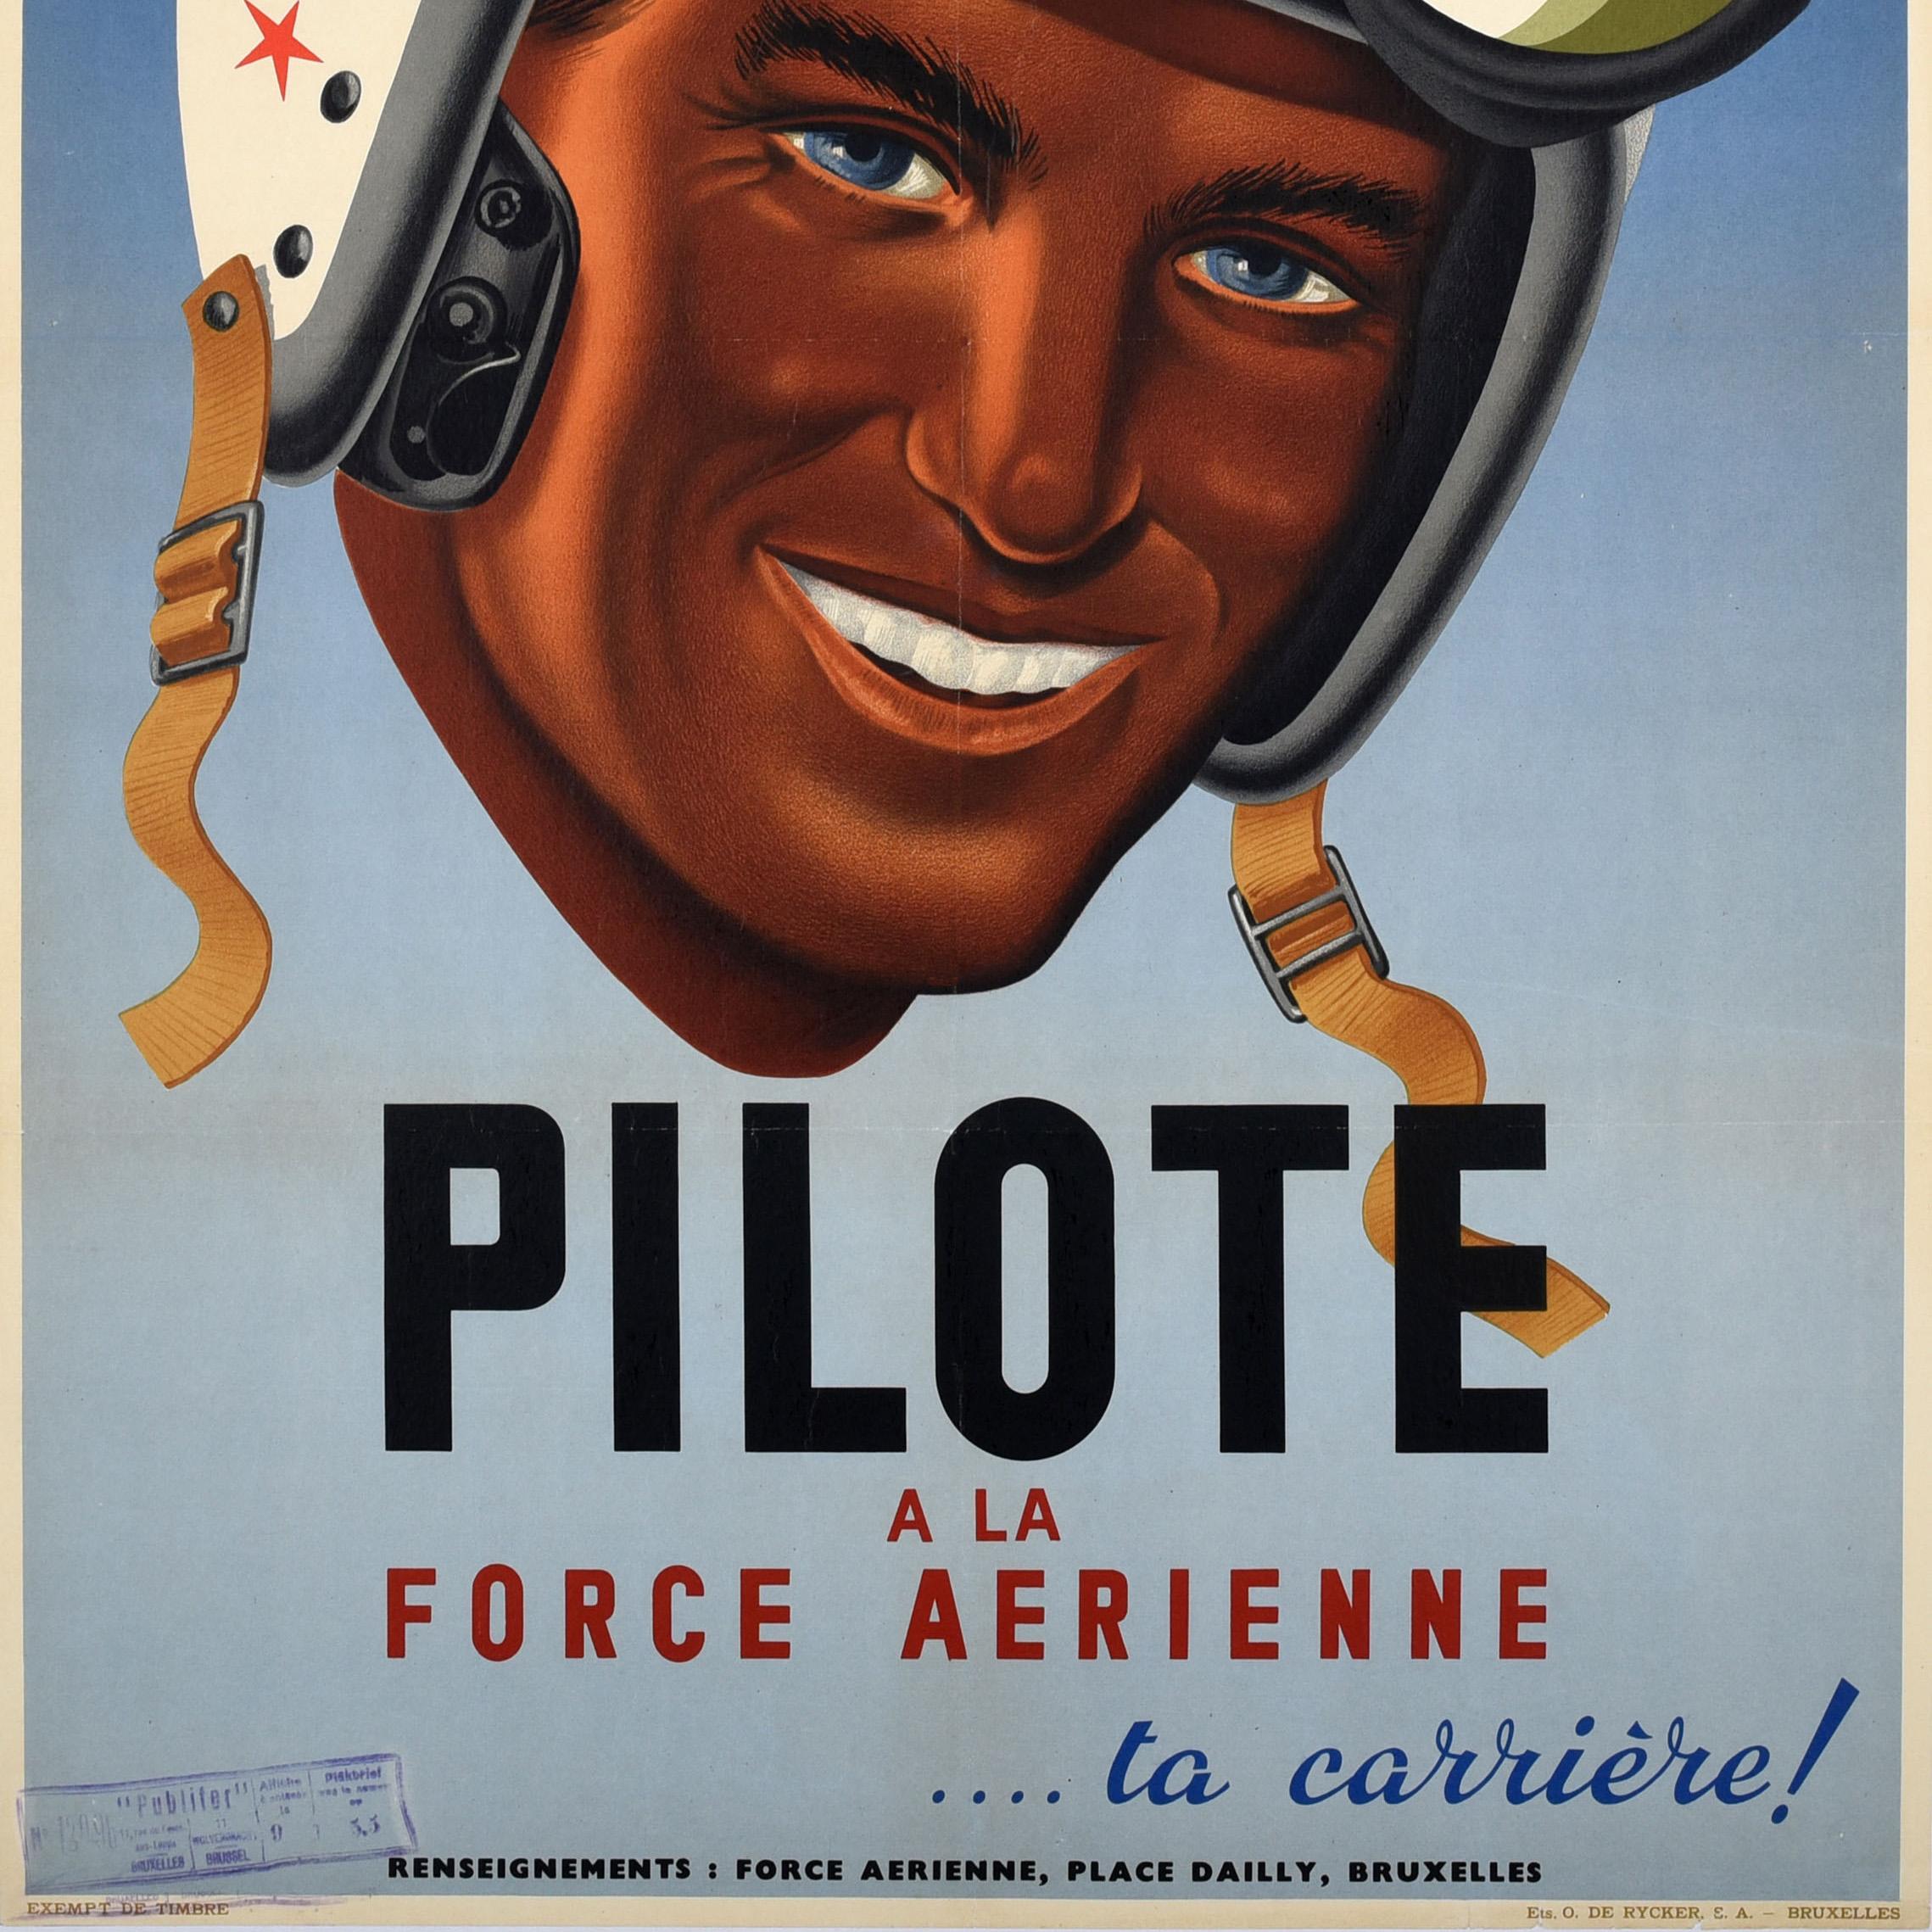 Original Vintage Recruitment Poster Air Force Pilot Belgium Force Aerienne Army For Sale 1